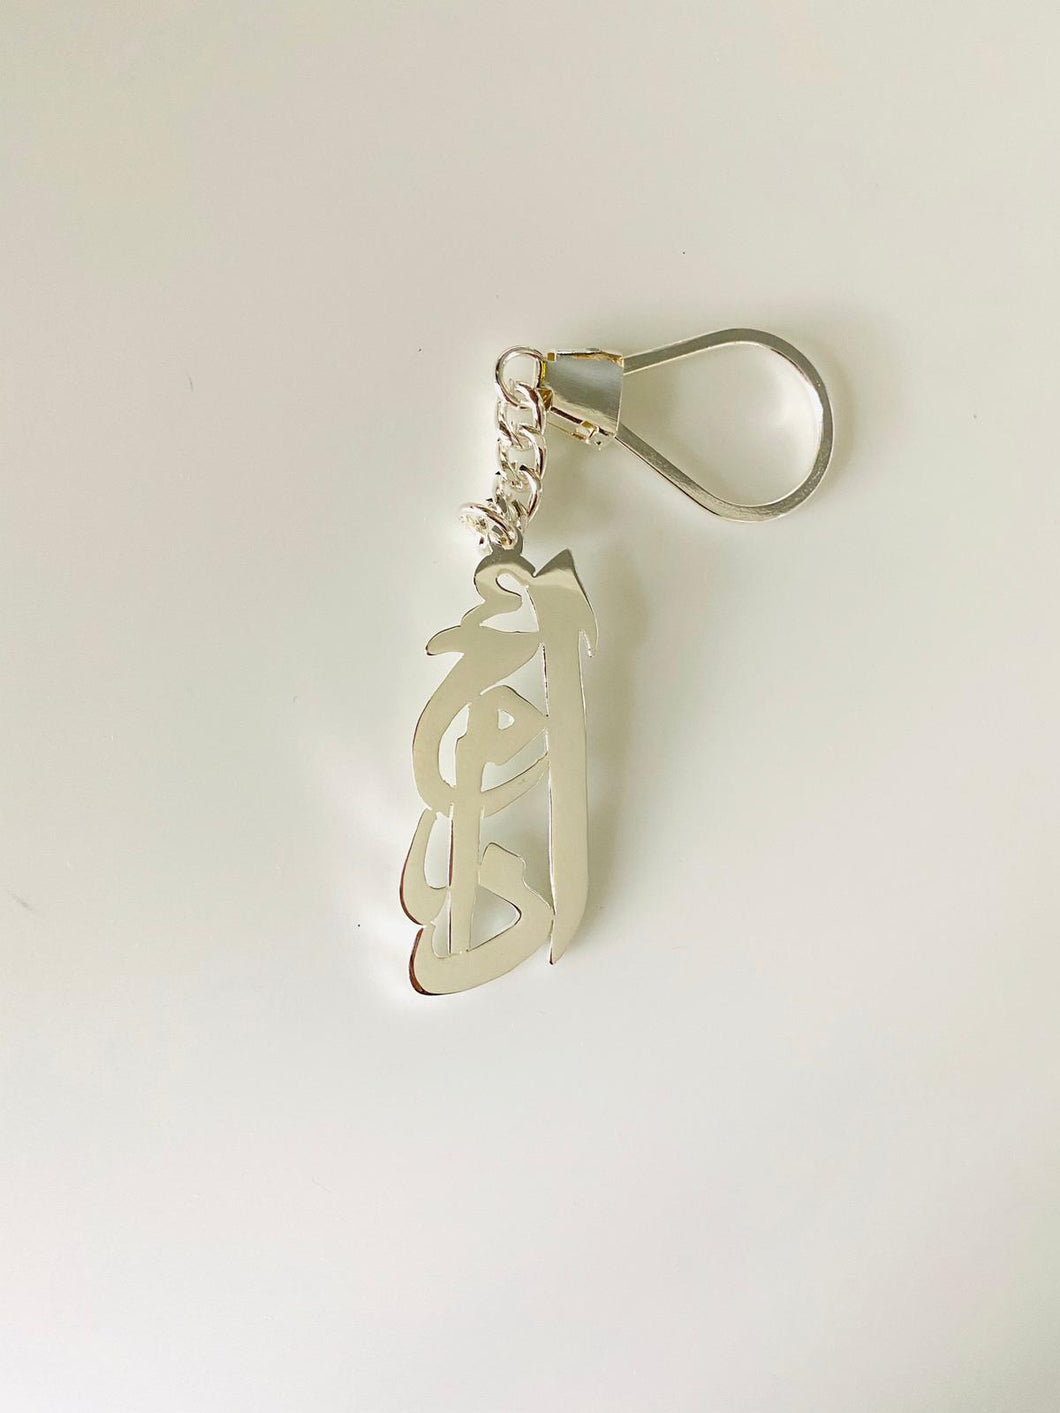 Keychain - Name Custom Simple silver